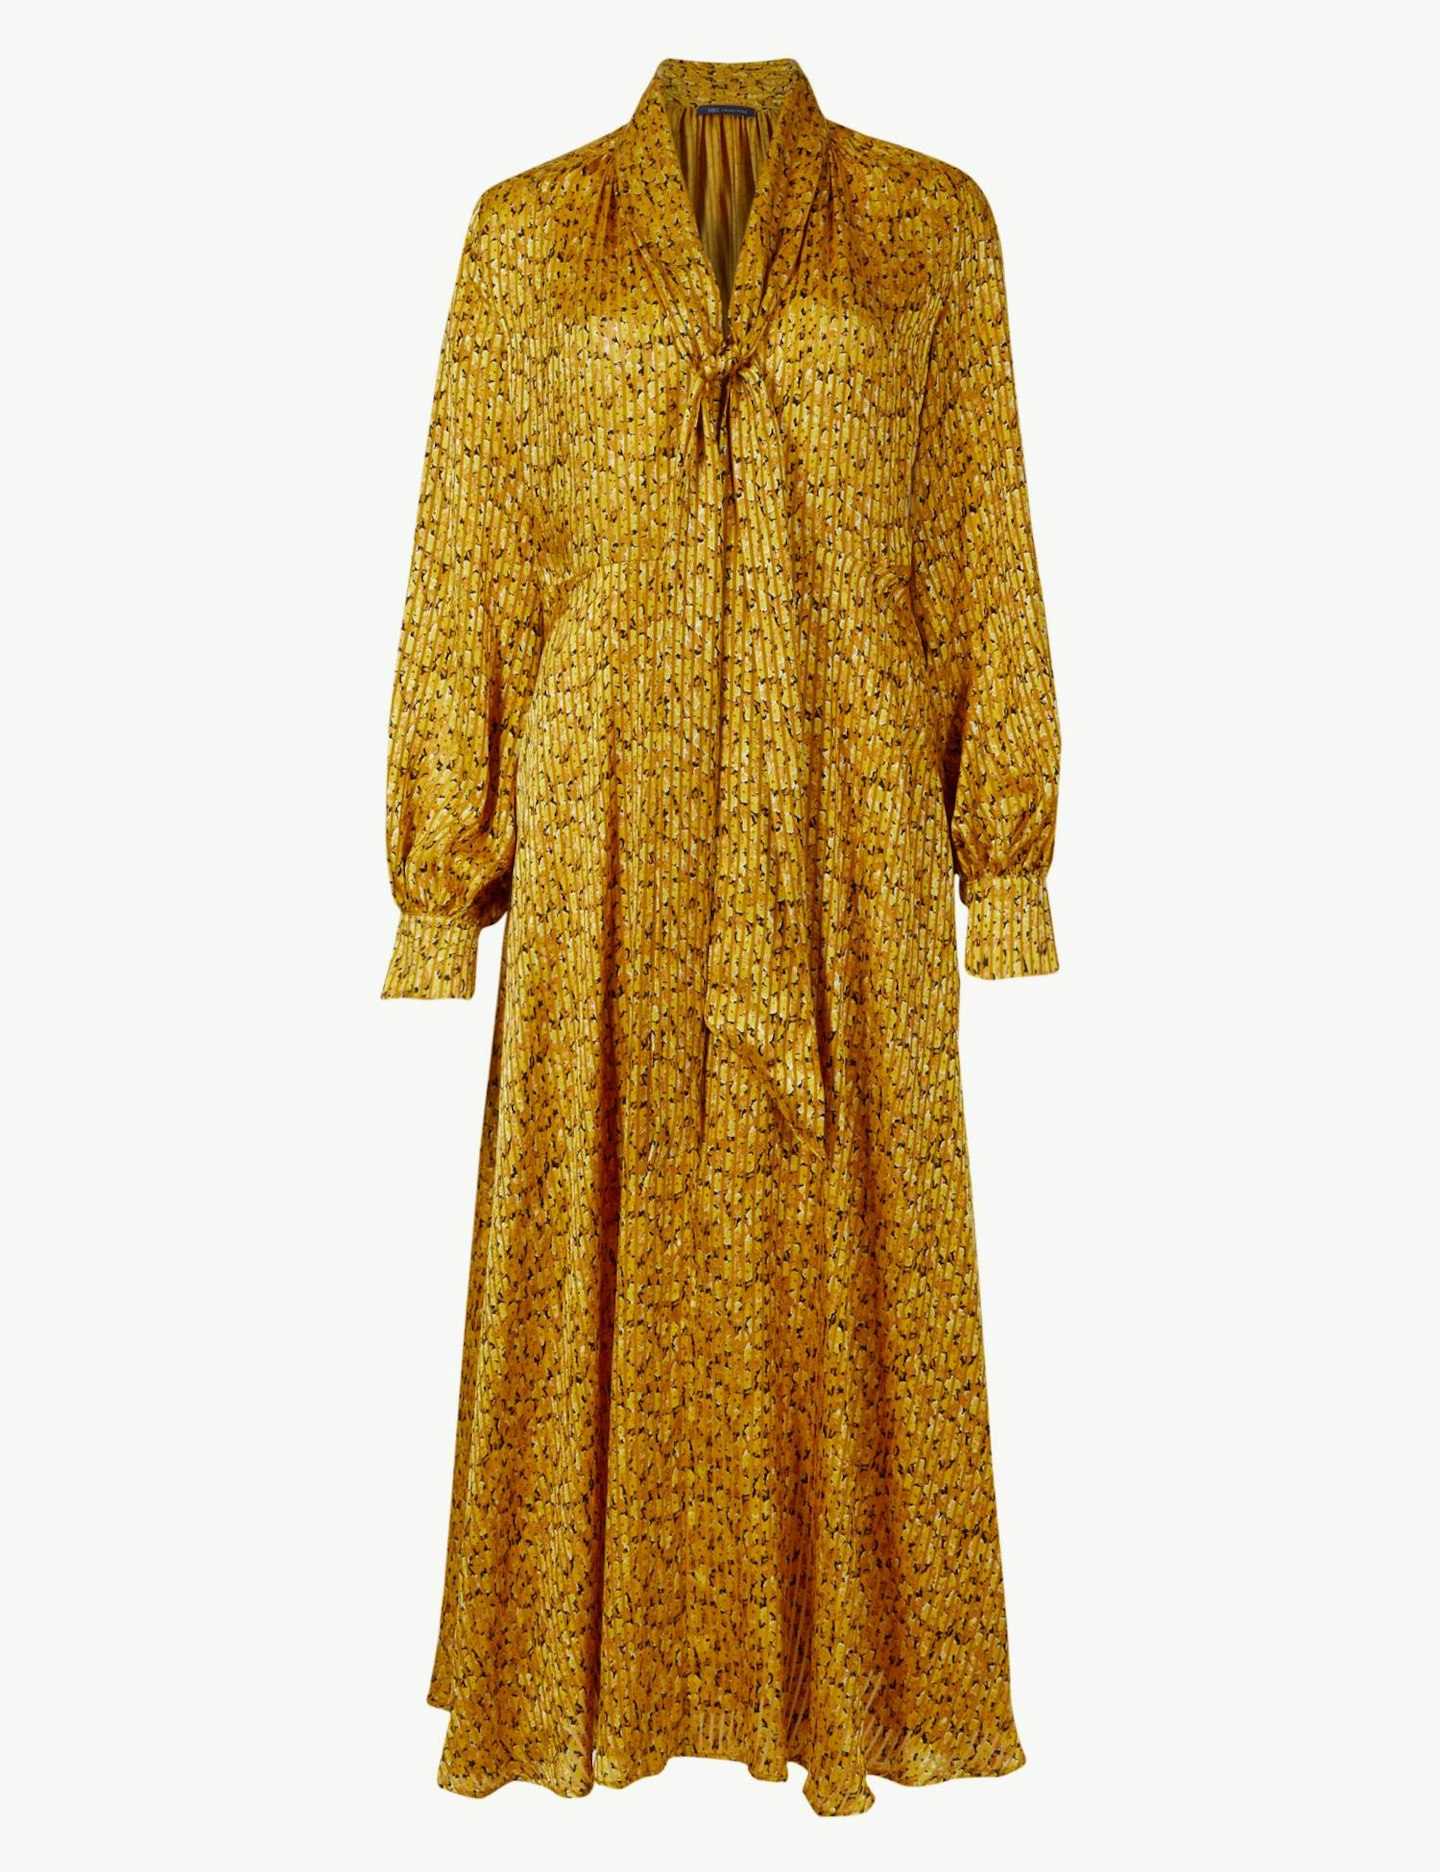 M&S Collection, Animal Print Long Sleeve Skater Midi Dress, £69